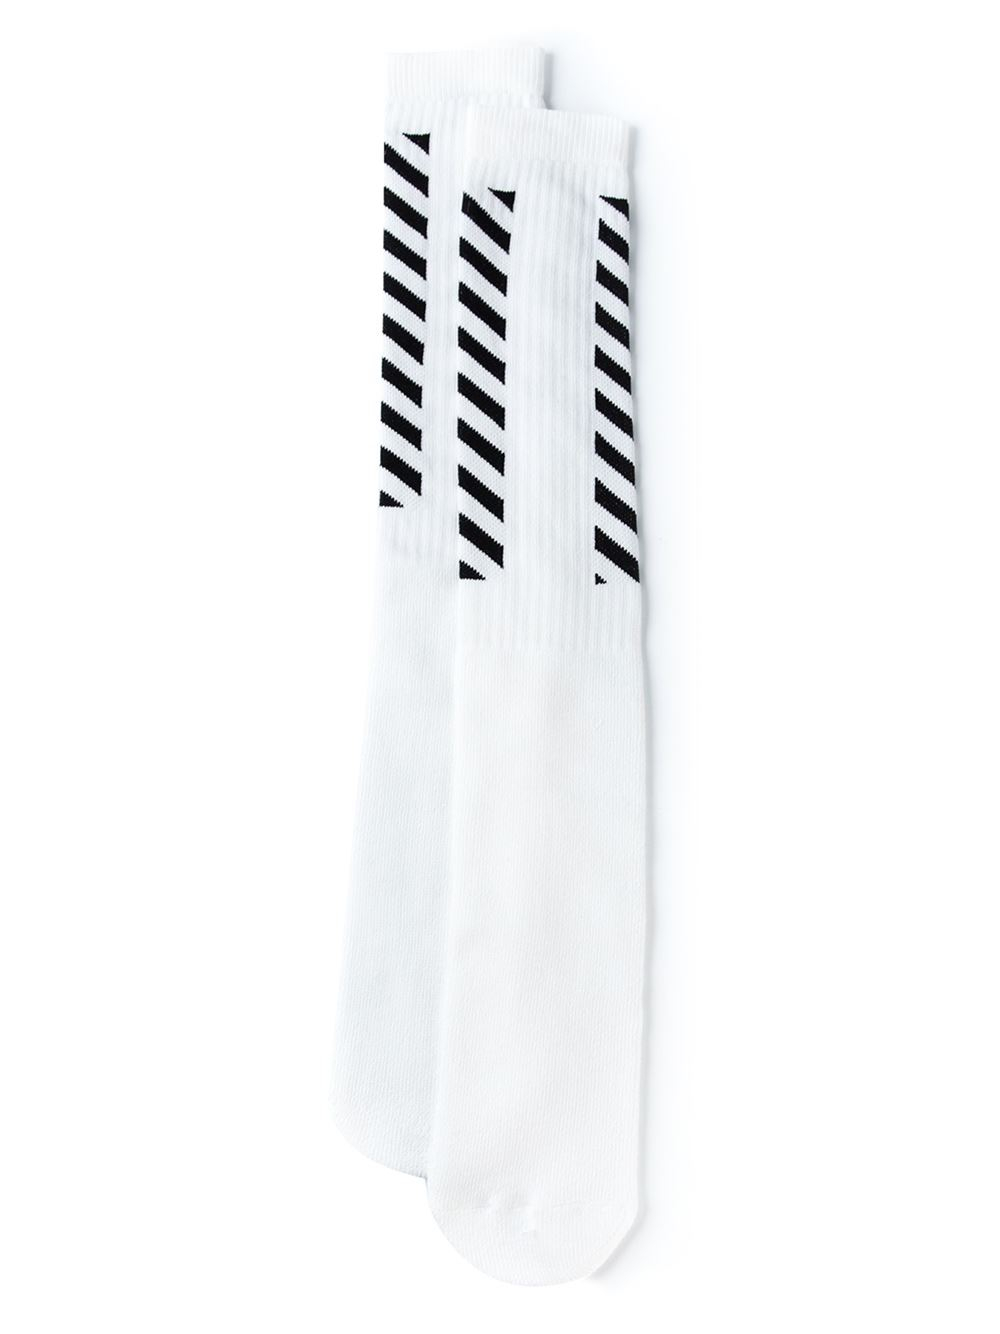 Off-White c/o Diagonal Striped Socks in for Men - Lyst